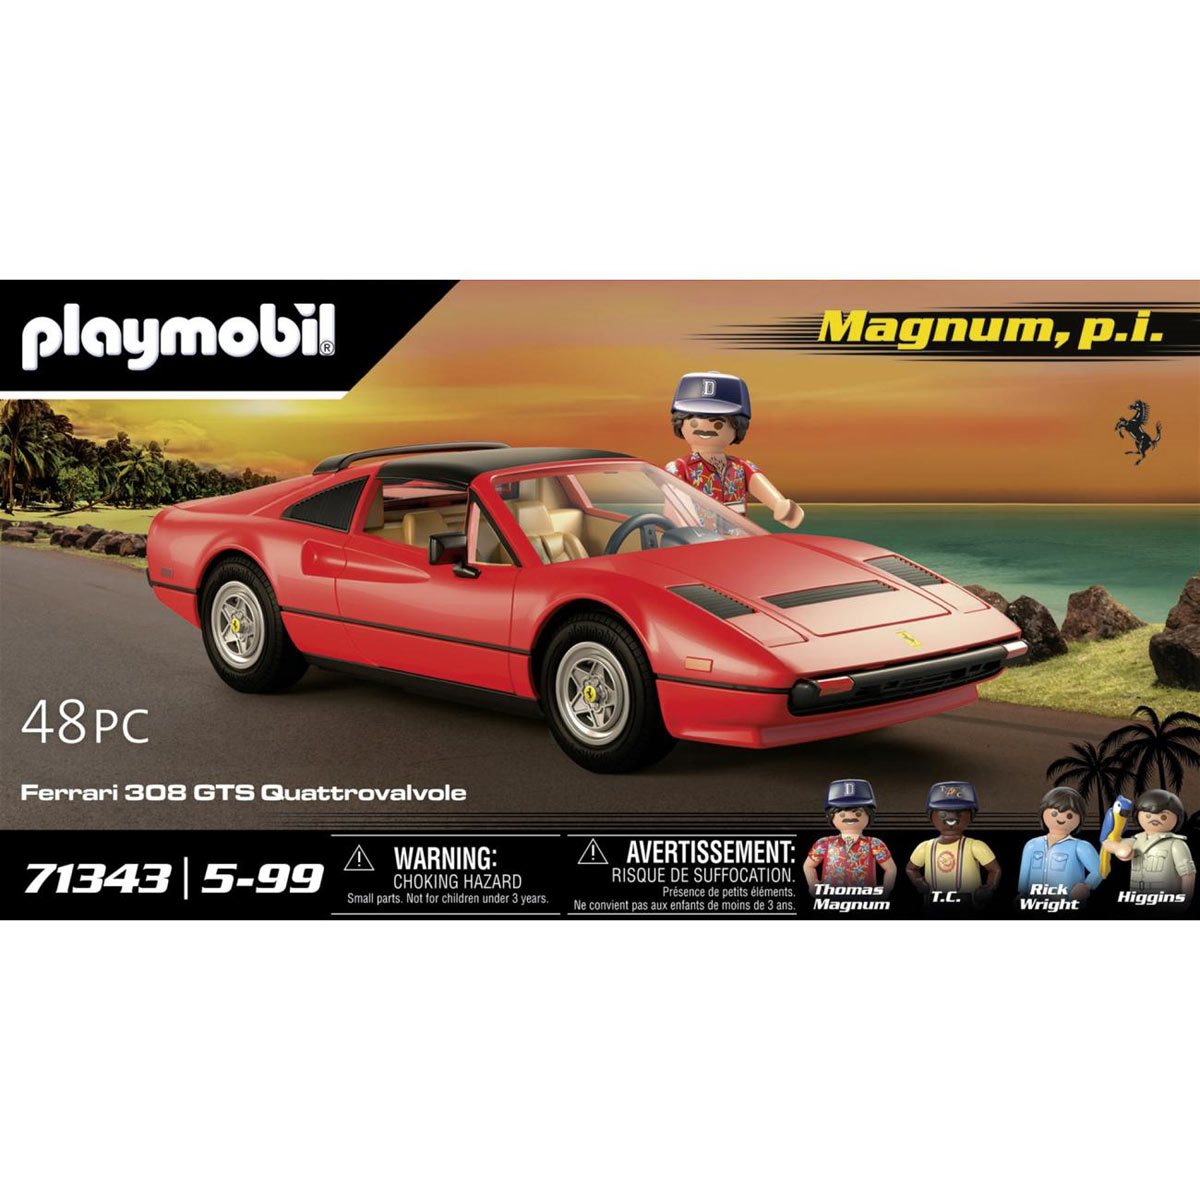 PLAYMOBIL Famous Cars 71343 Magnum, P.I. Ferrari 308 GTS